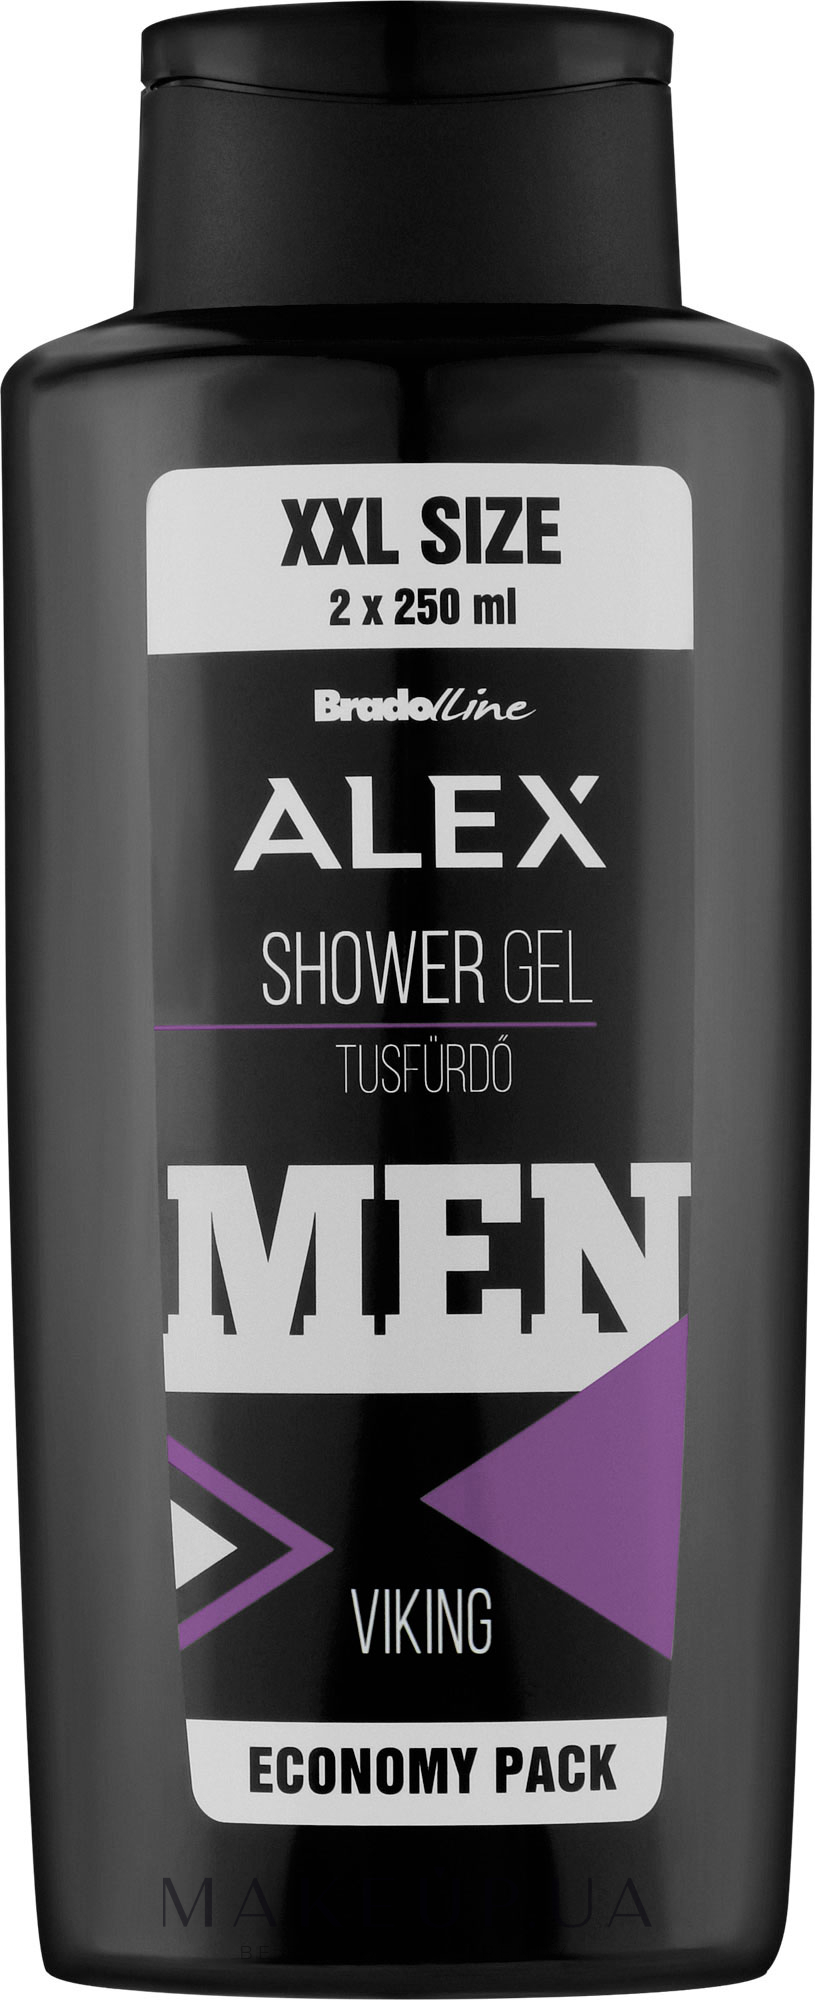 Гель для душа - Bradoline Alex Viking XXL Size Shower Gel — фото 500ml